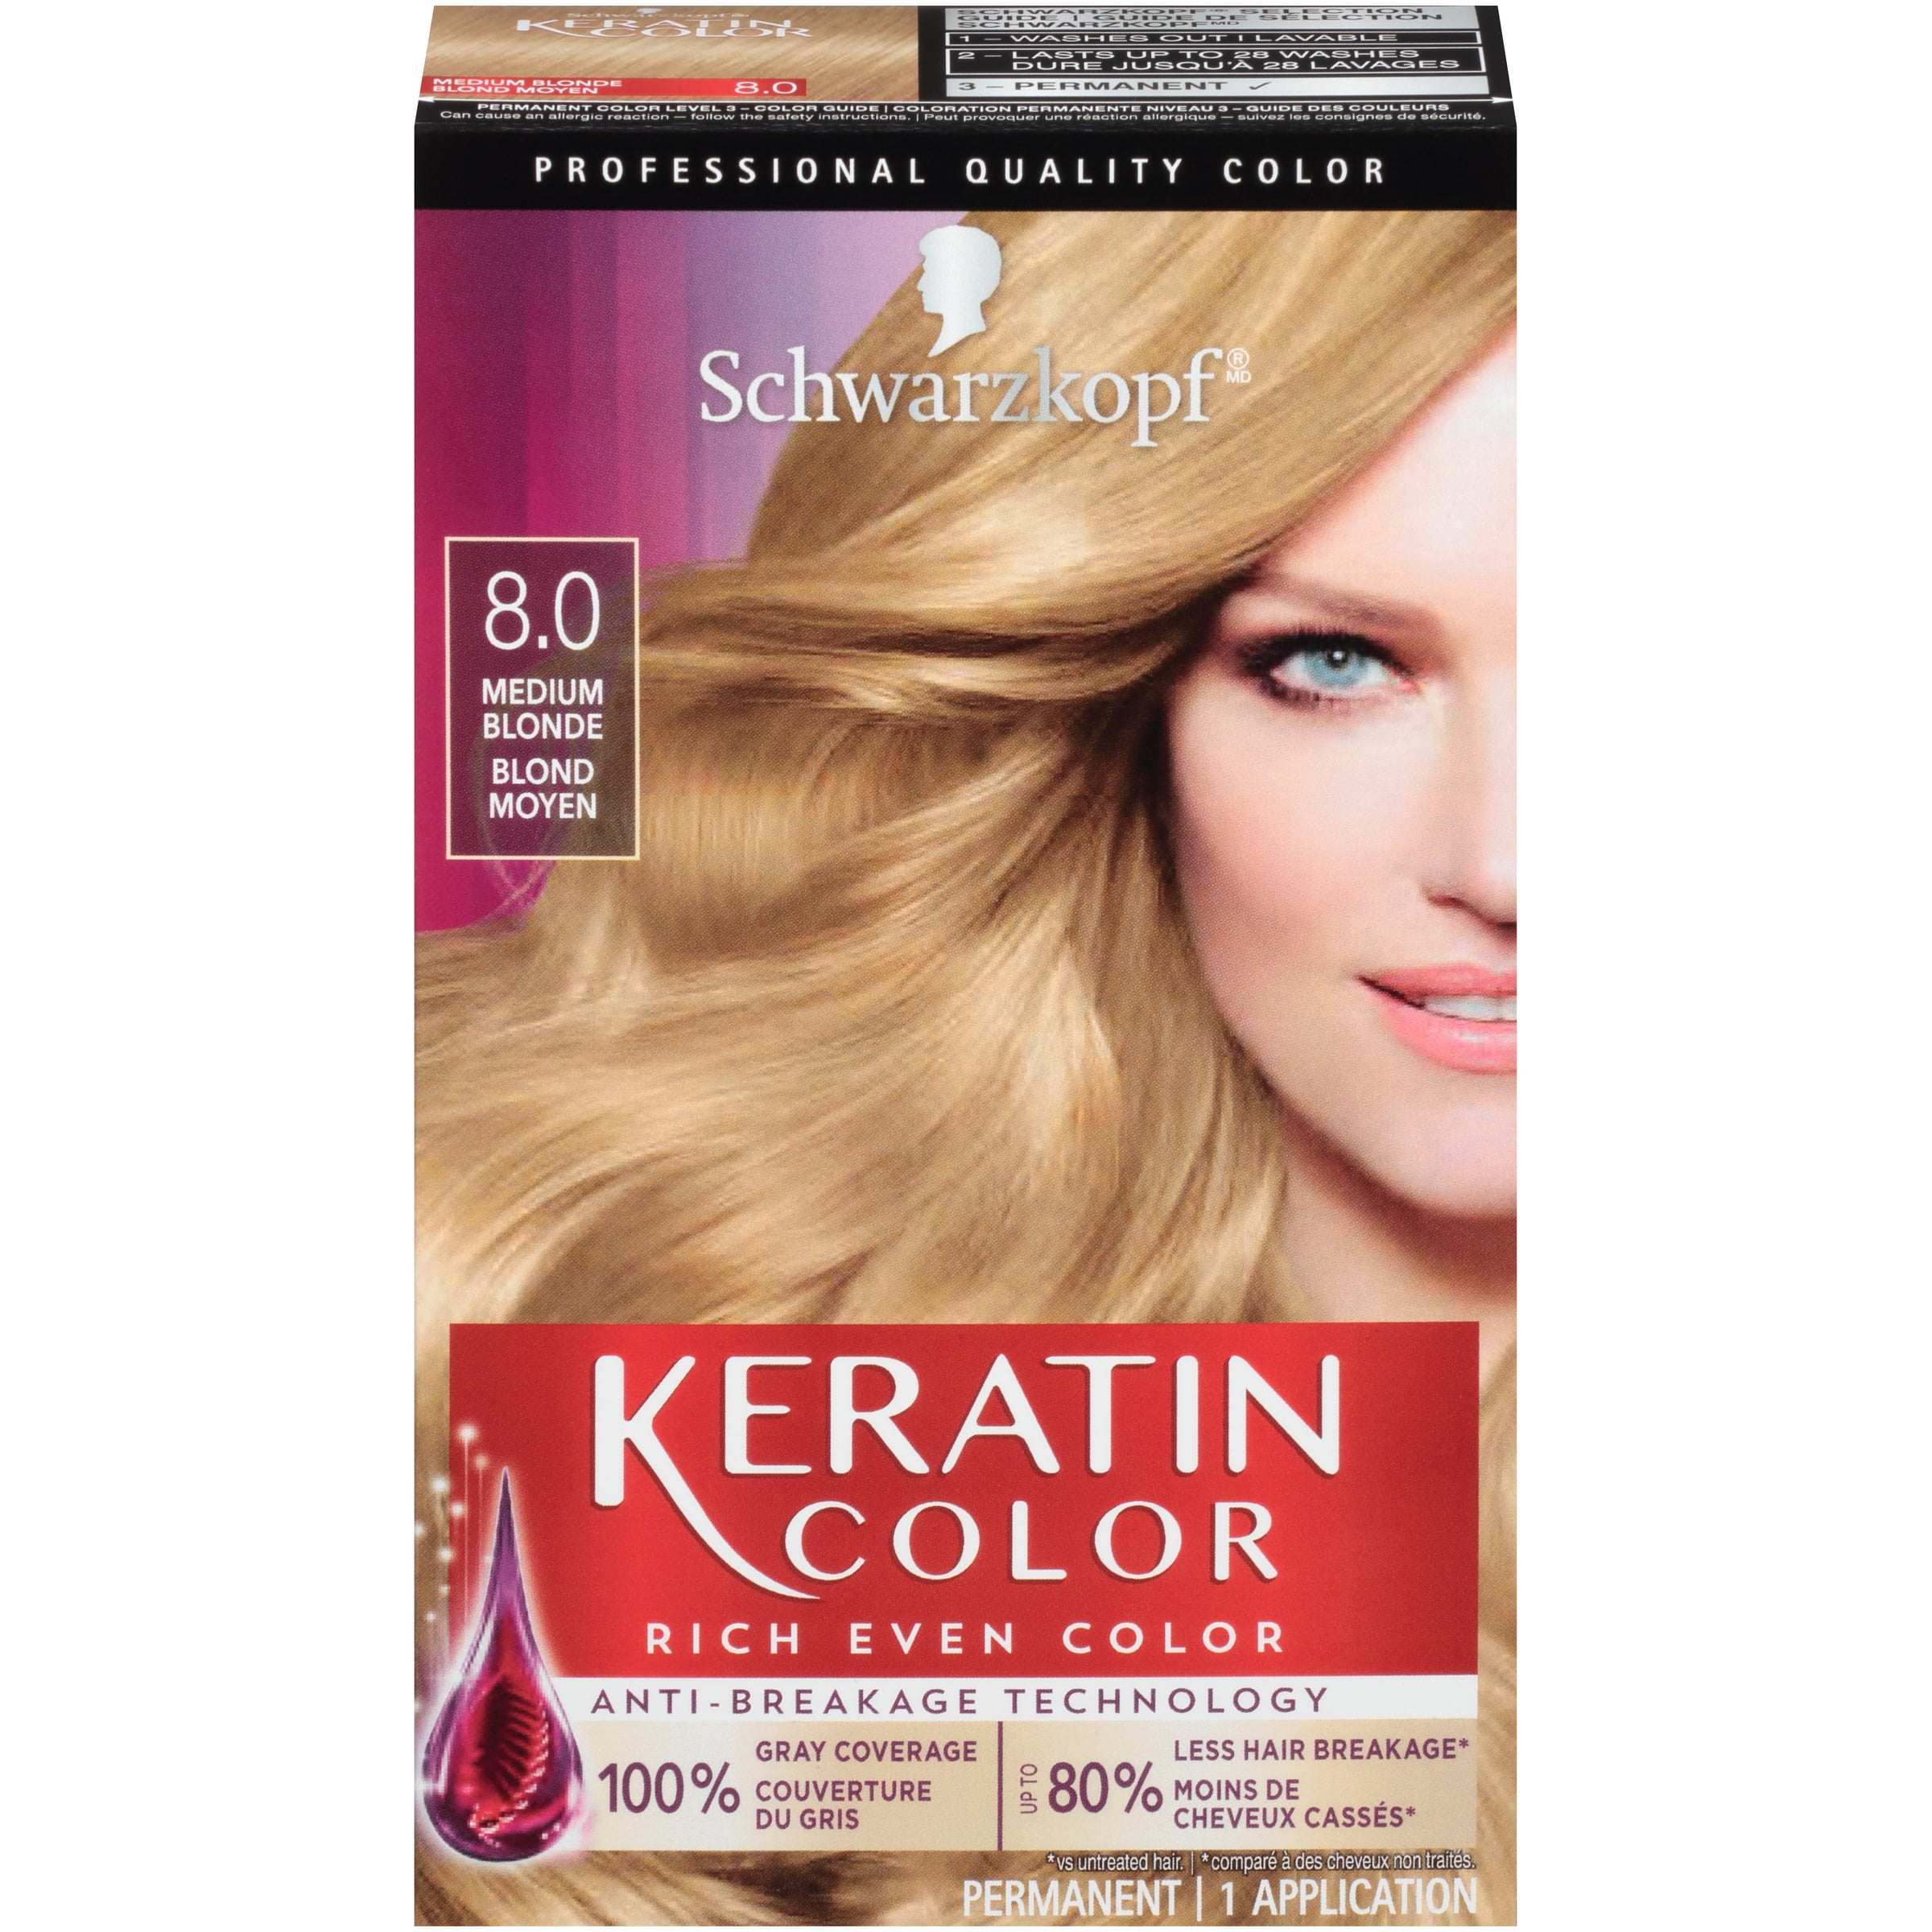 Schwarzkopf Keratin Color Permanent Hair Color Cream, 8.0 Medium Blonde -